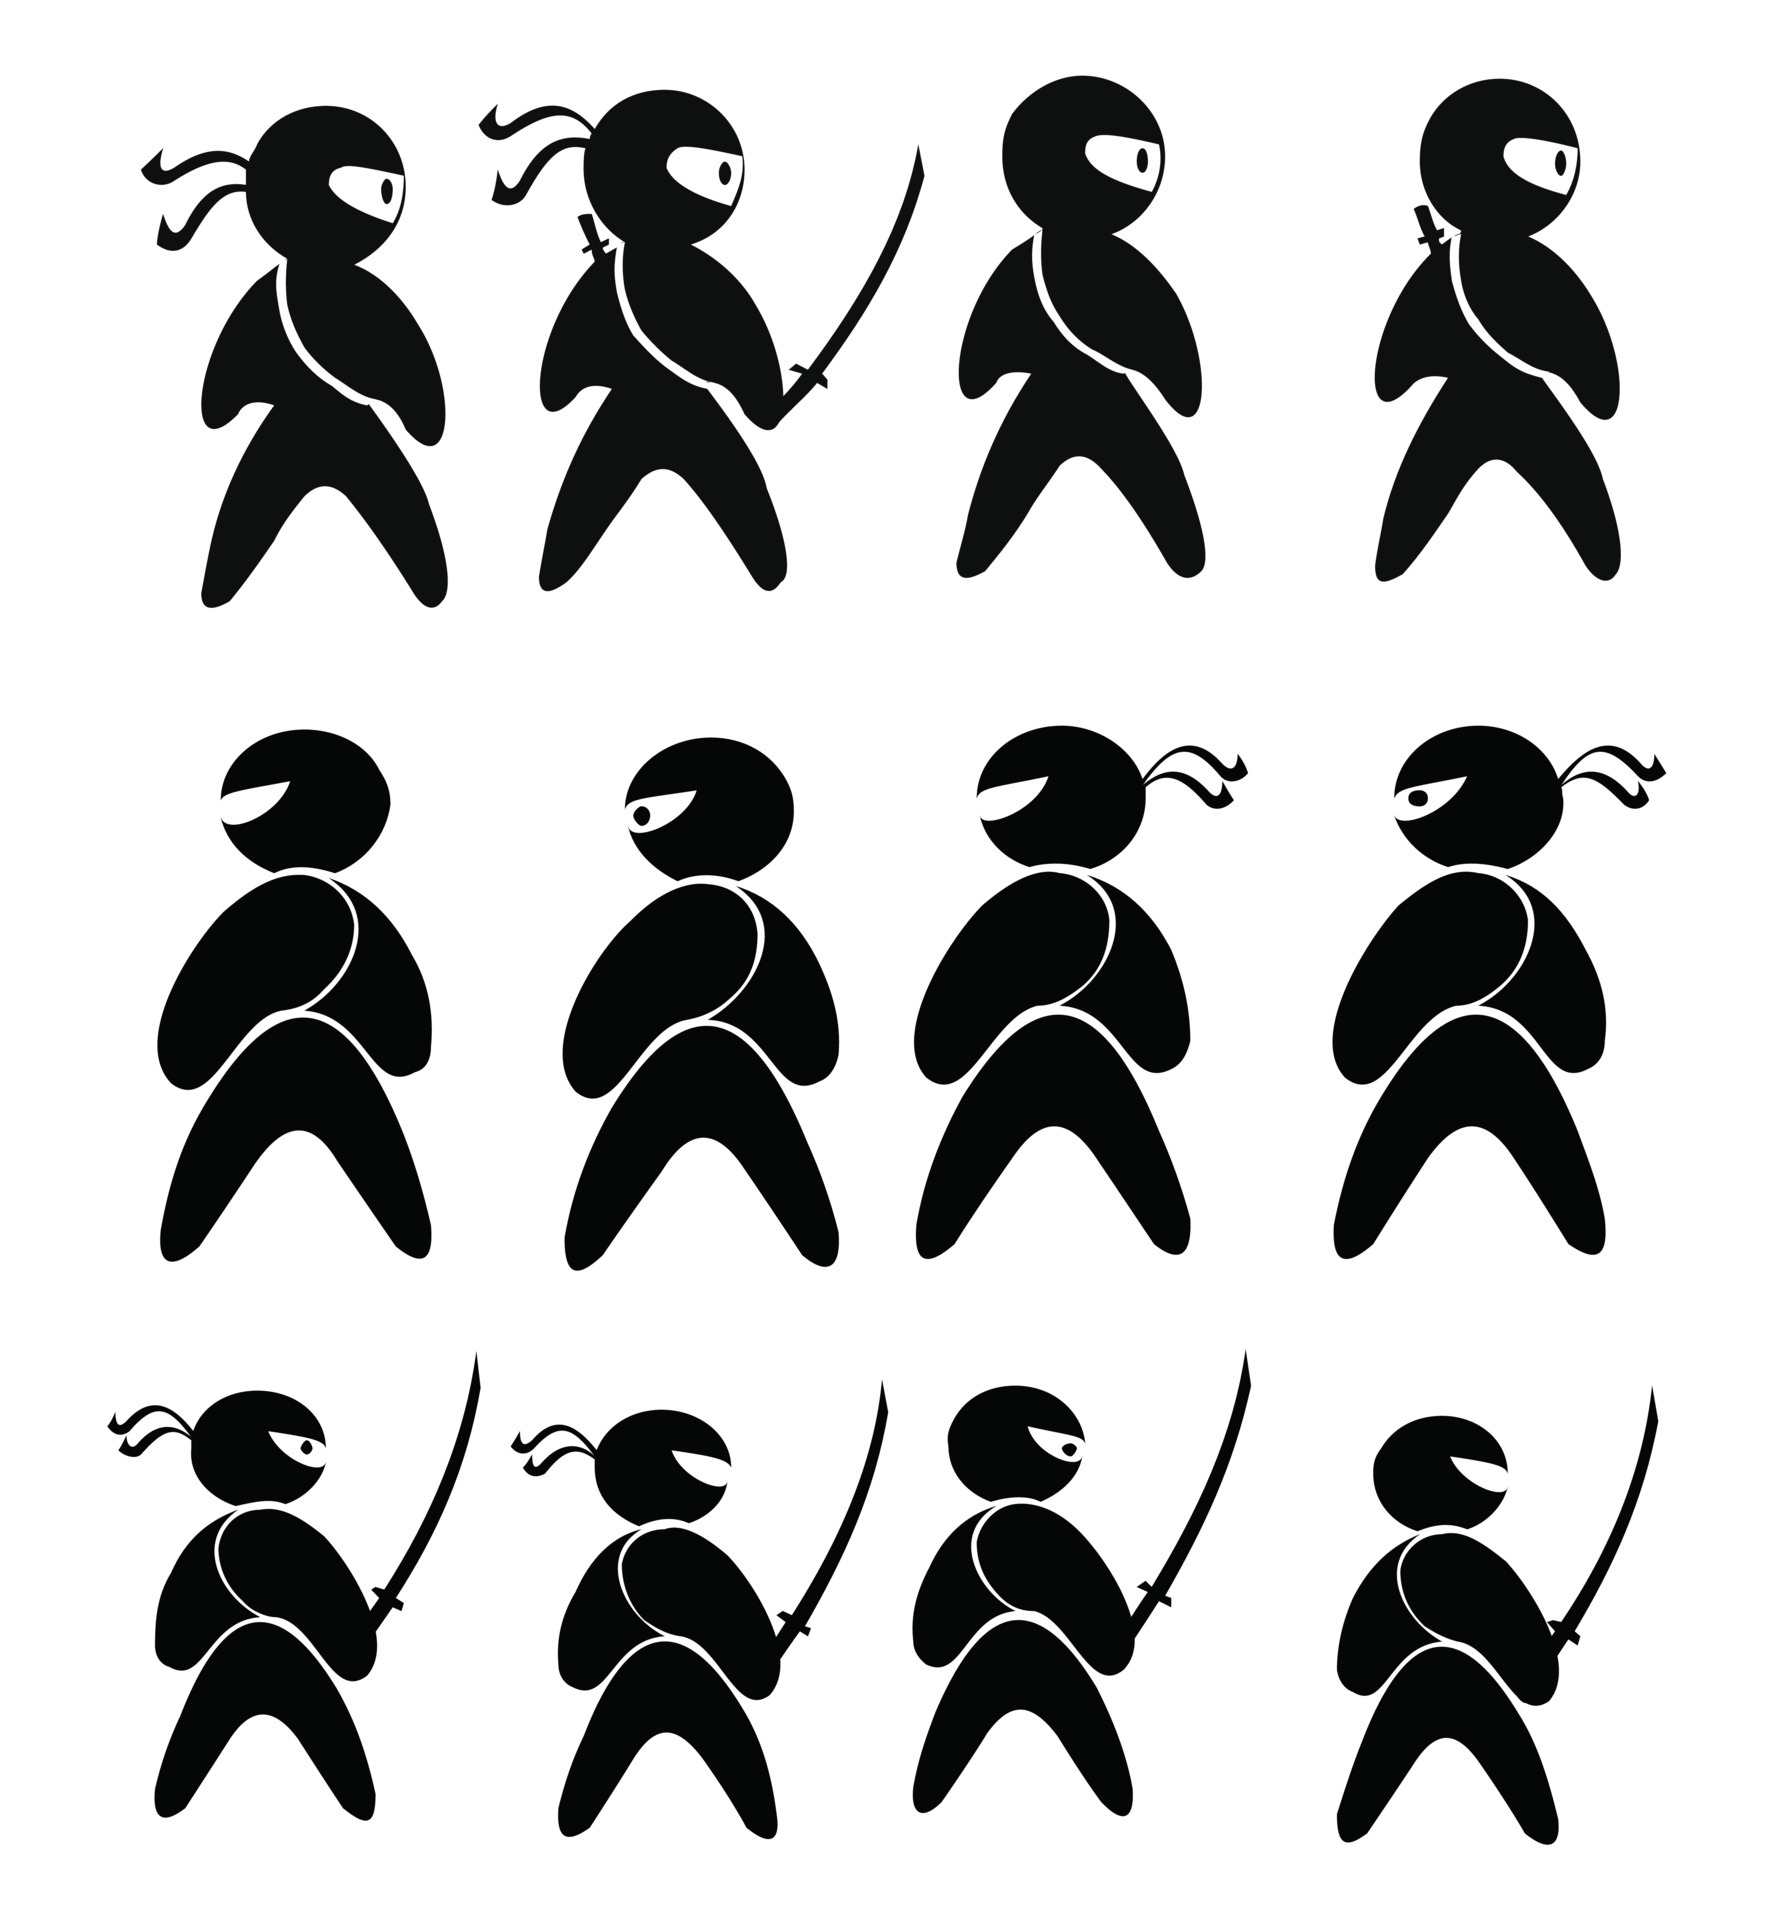 ninja samurai guerreiro lutador personagem desenho animado arte marcial  arma shuriken 5089299 Vetor no Vecteezy